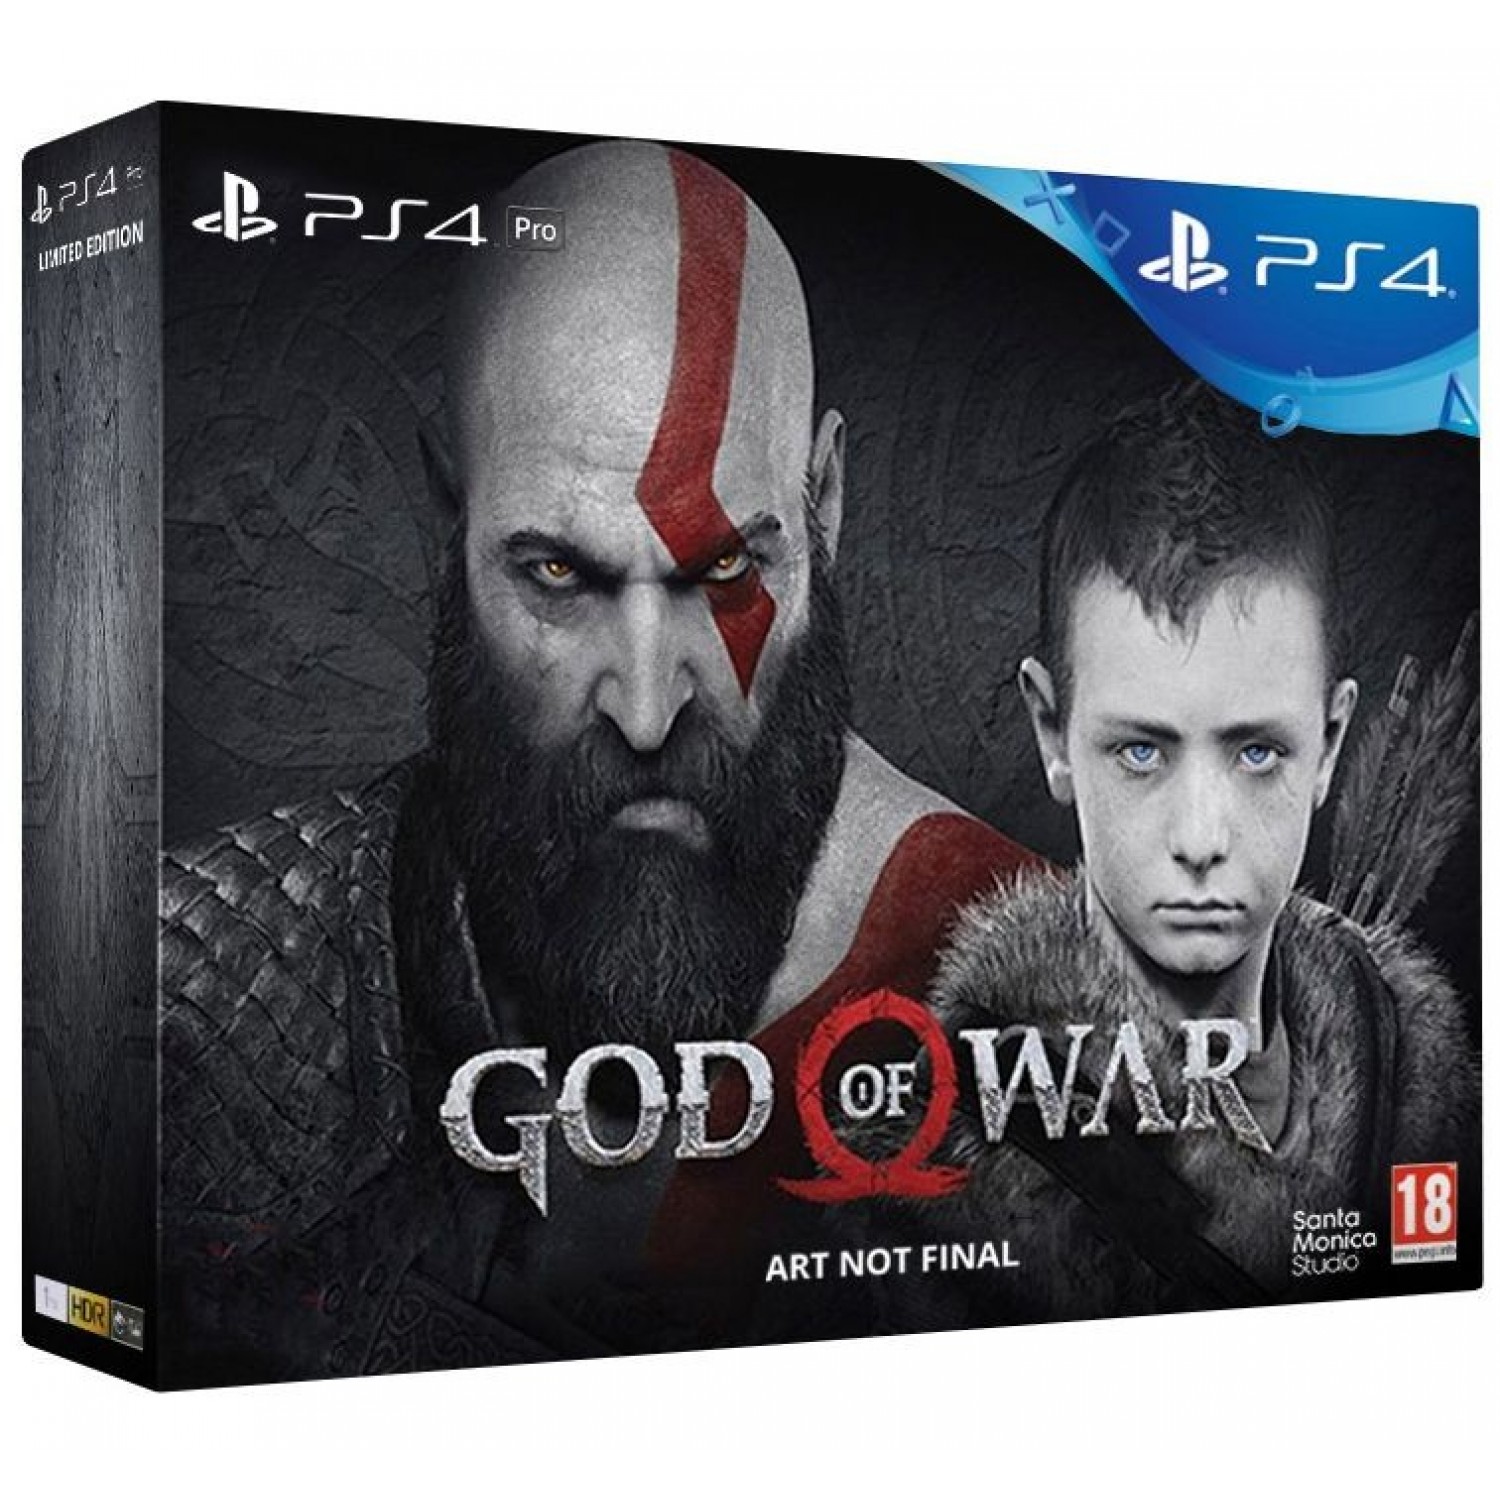 PS4 Pro God of war Bundle